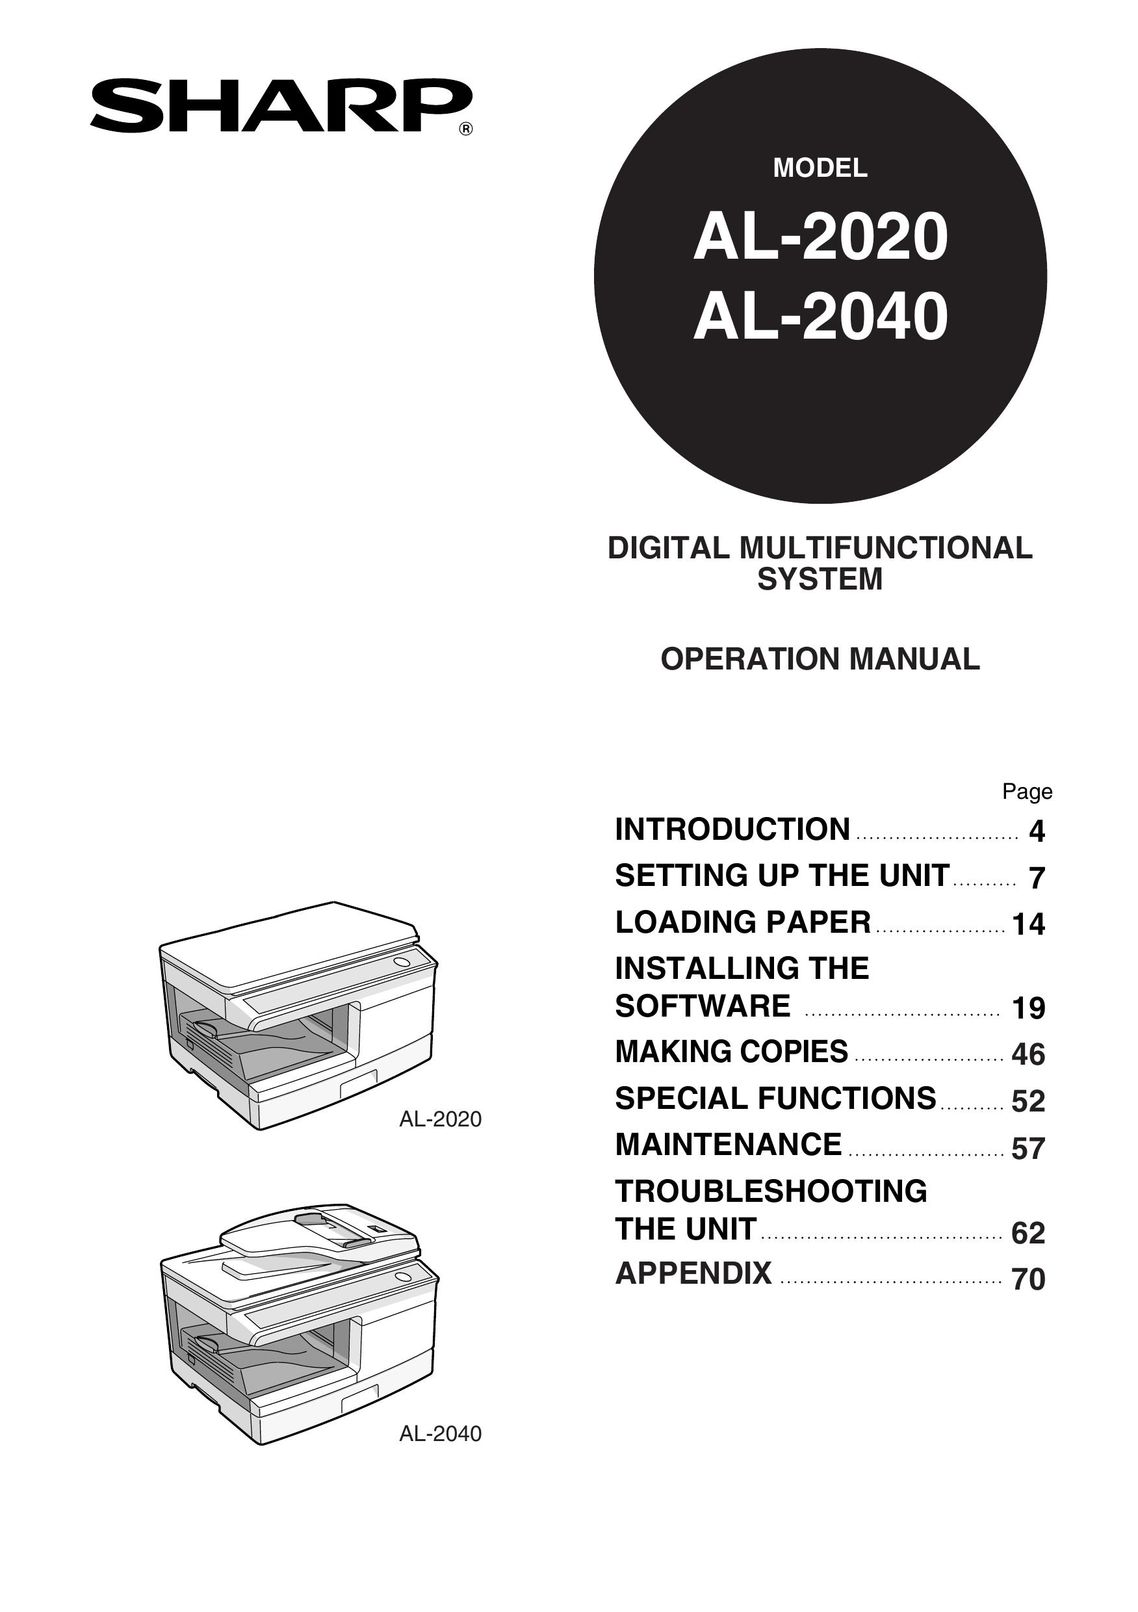 Sharp AL-2020 All in One Printer User Manual